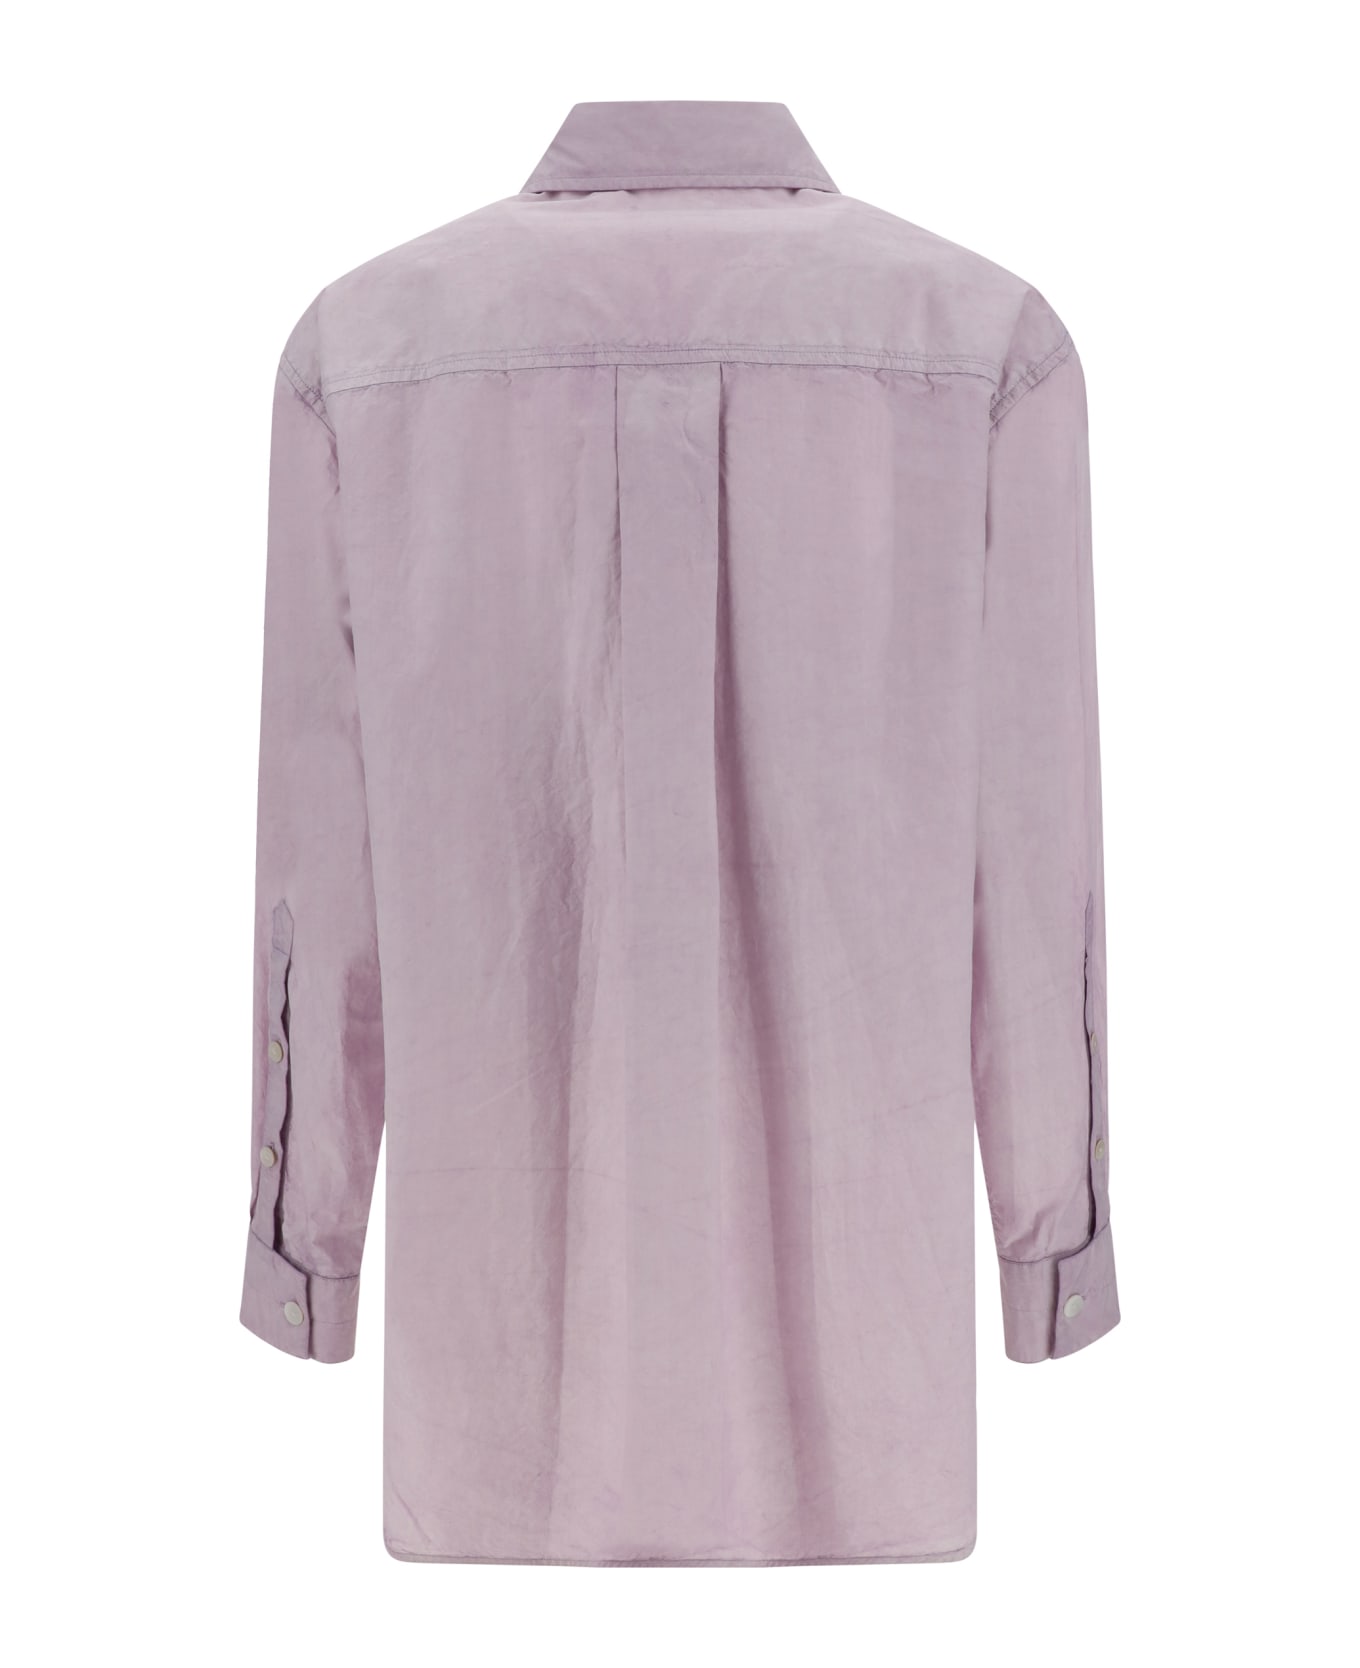 Quira Shirt - Misty Lilac シャツ